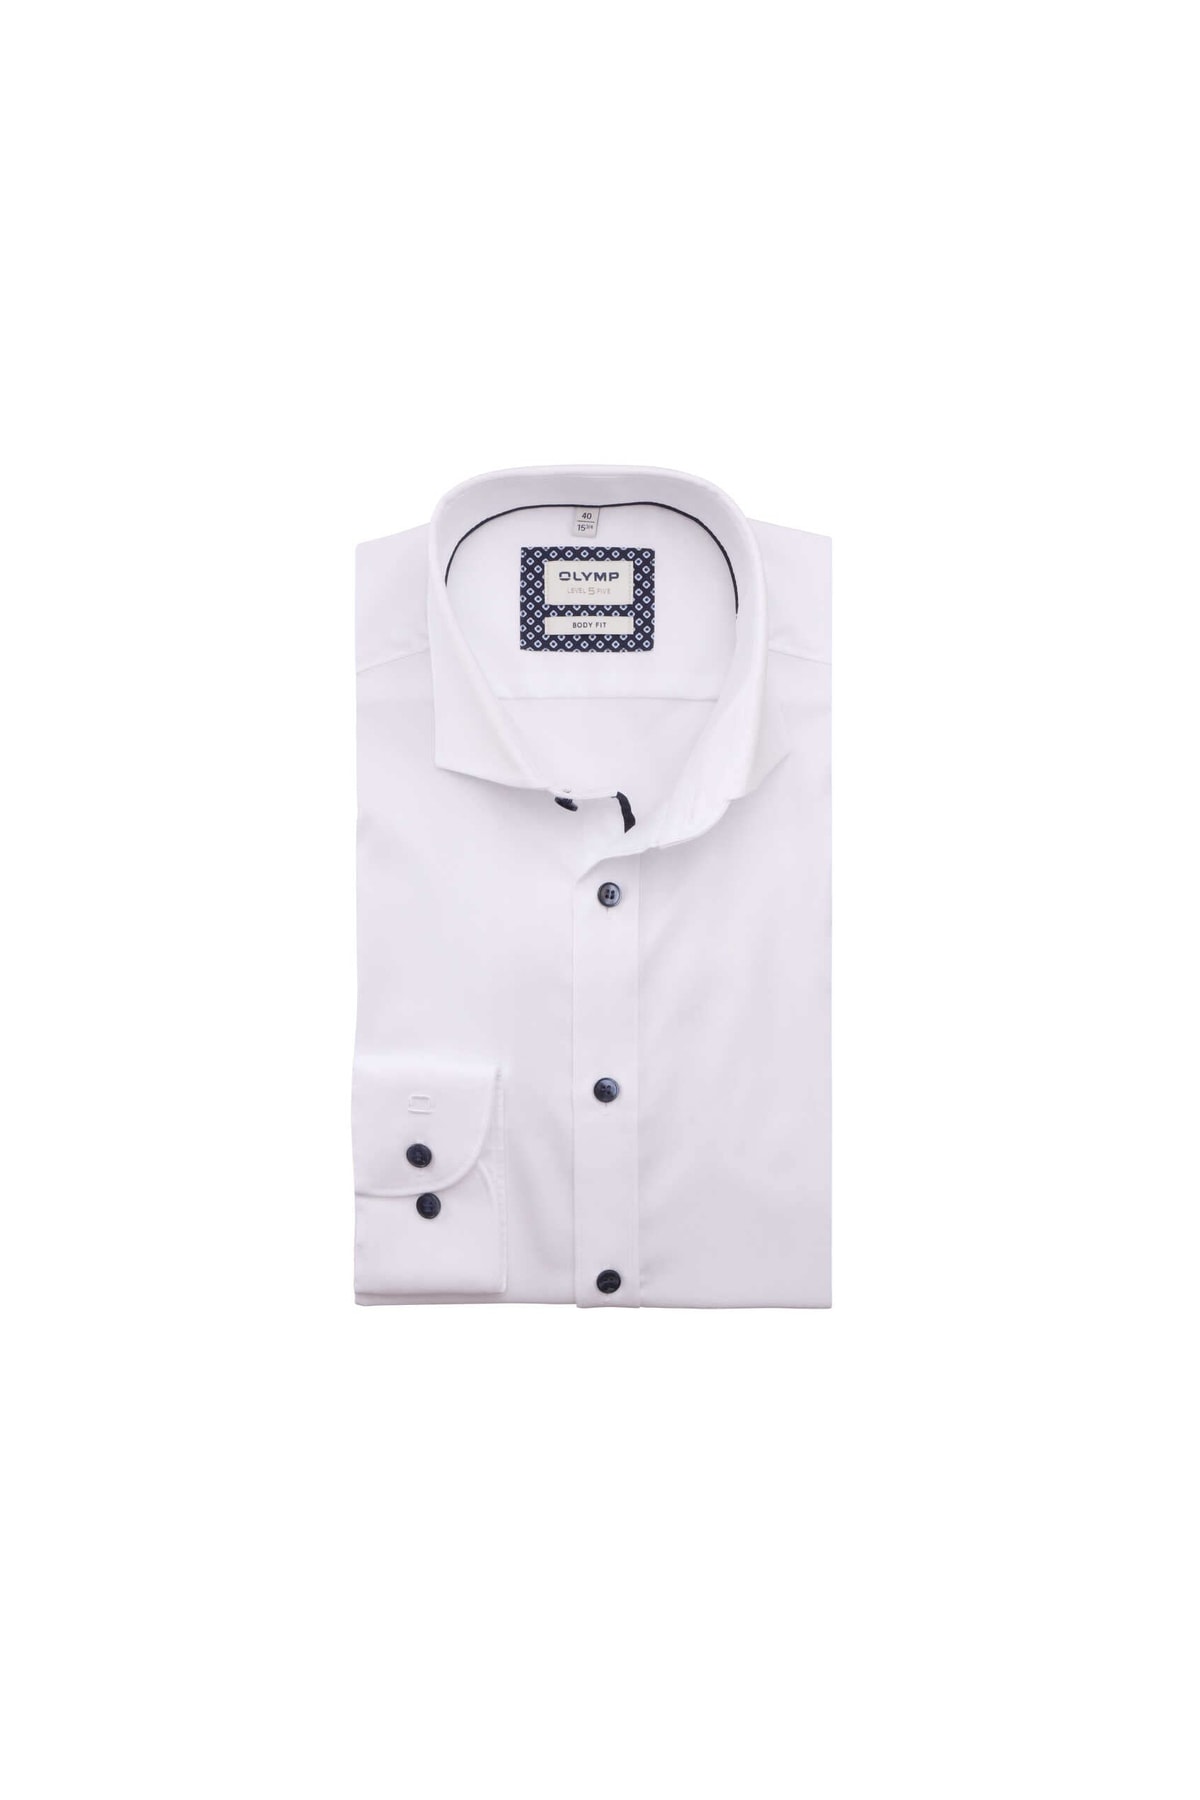 OLYMP Hemd Weiß Regular Fit Fast ausverkauft FN7506